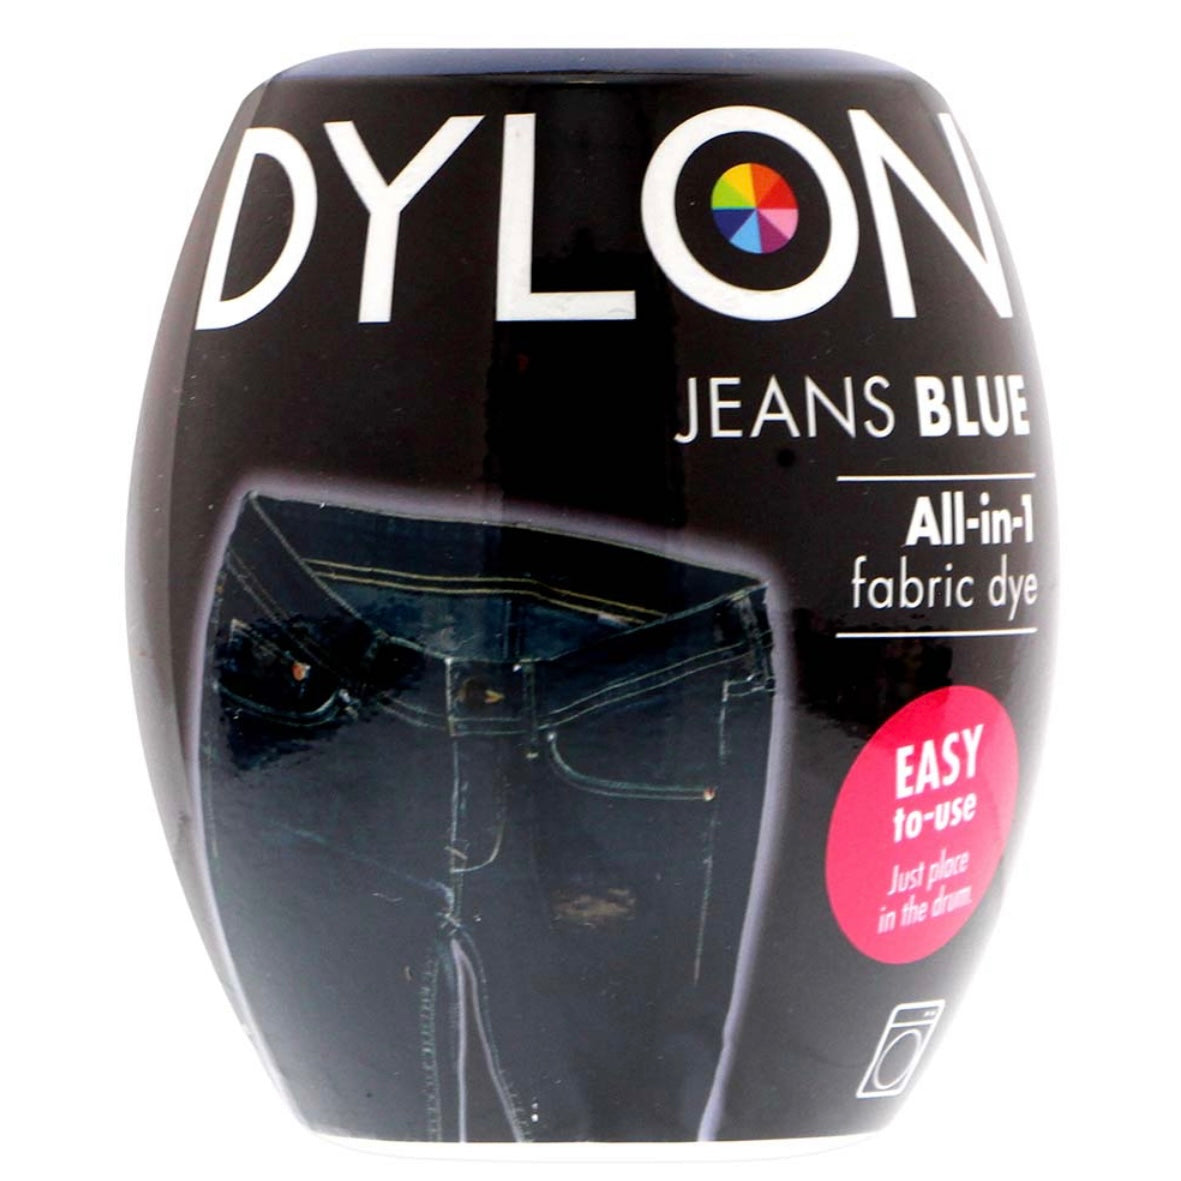 Rit Back to Black Fabric Dye Kit | JOANN